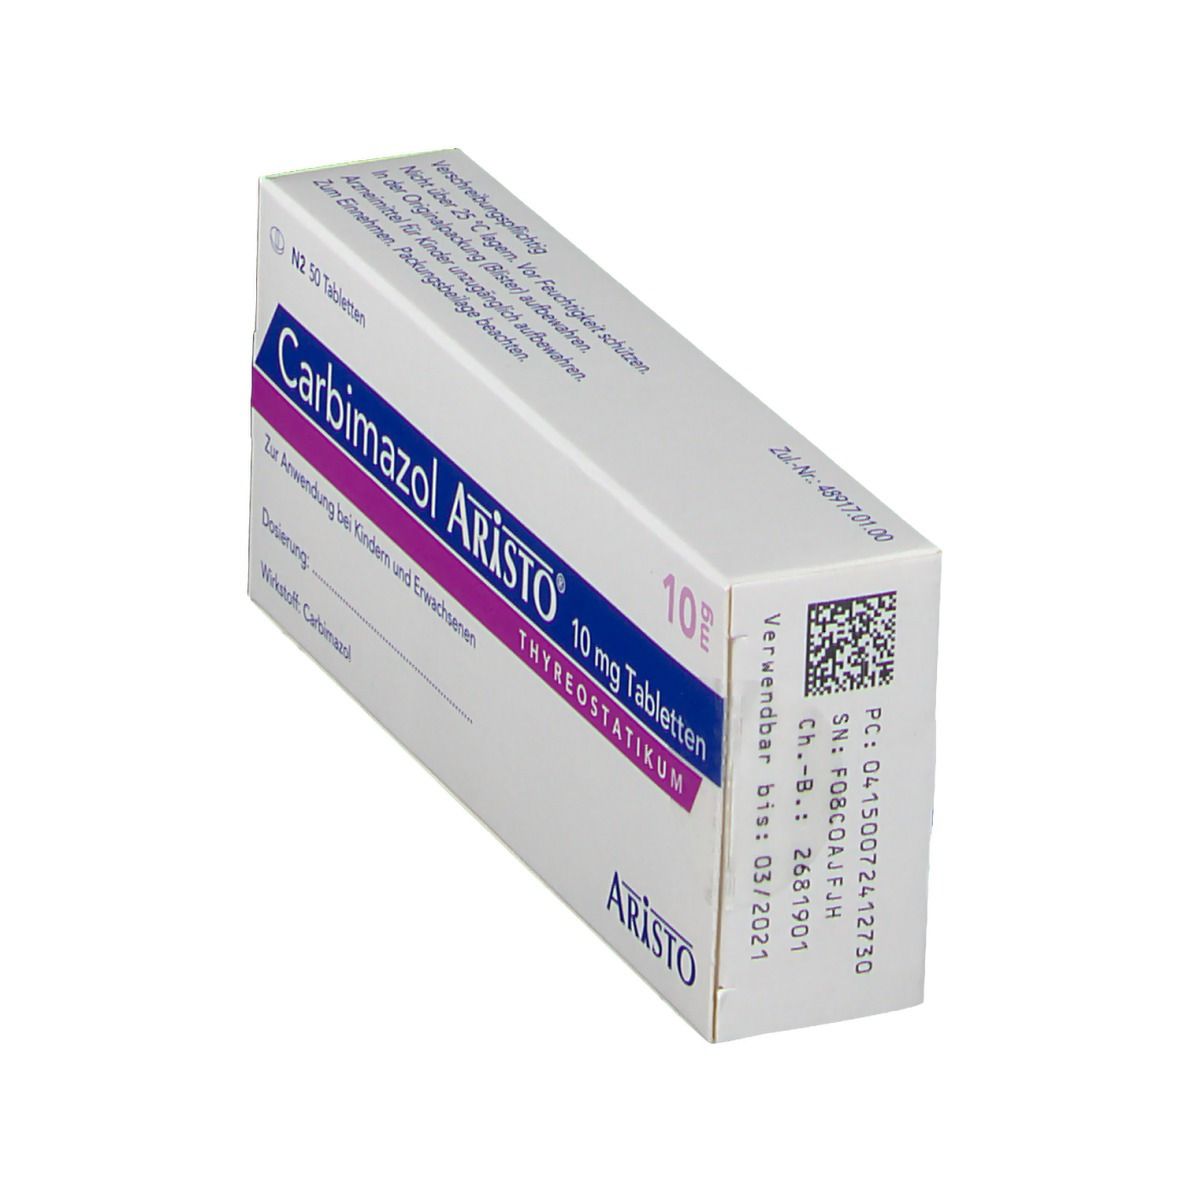 Carbimazol Aristo® 10 mg